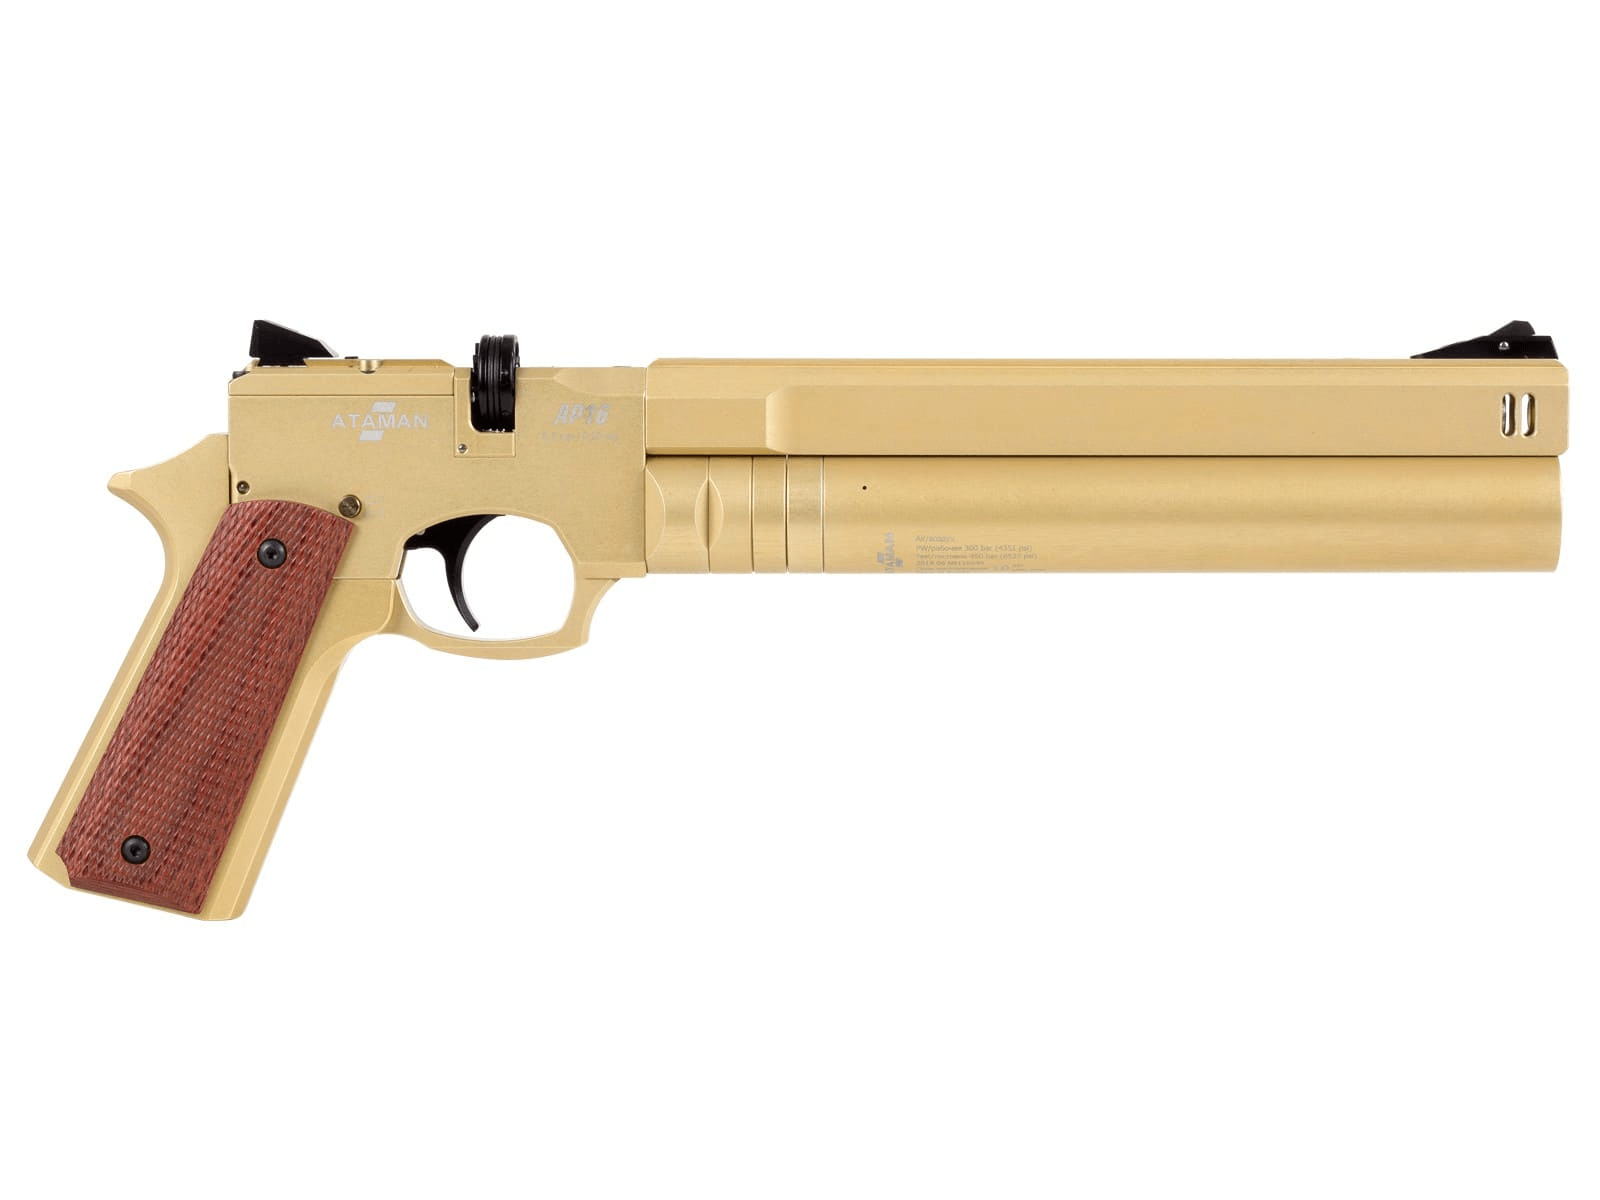 Пневматический PCP пистолет ATAMAN AP16 Desert Standart (рукоятка Metal), кал. 4.5мм